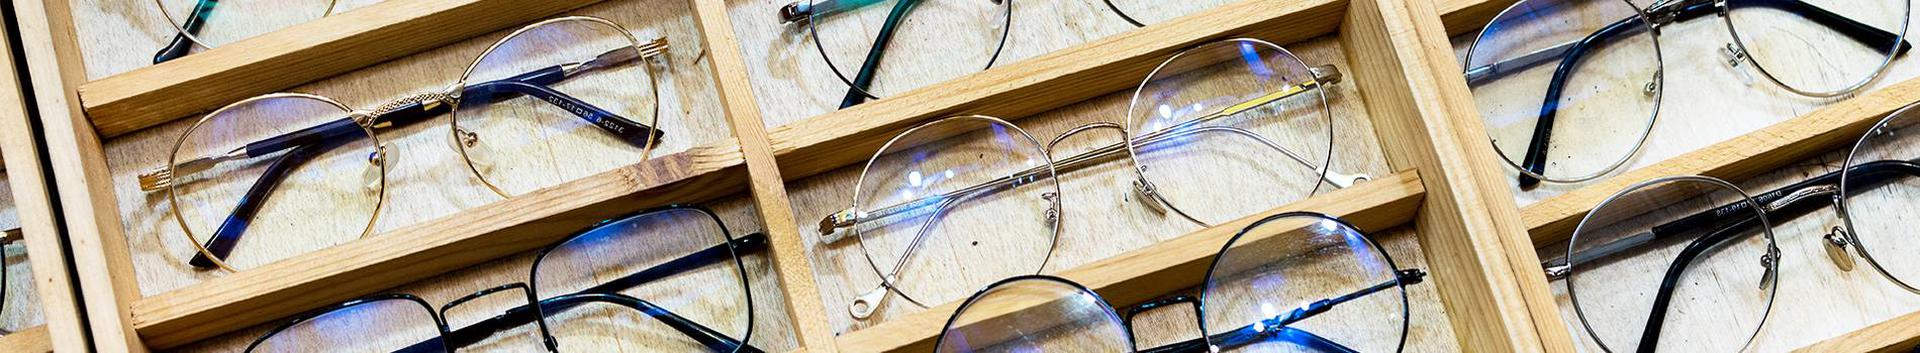 medical equipment and supplies, Optics, eyeglass repair